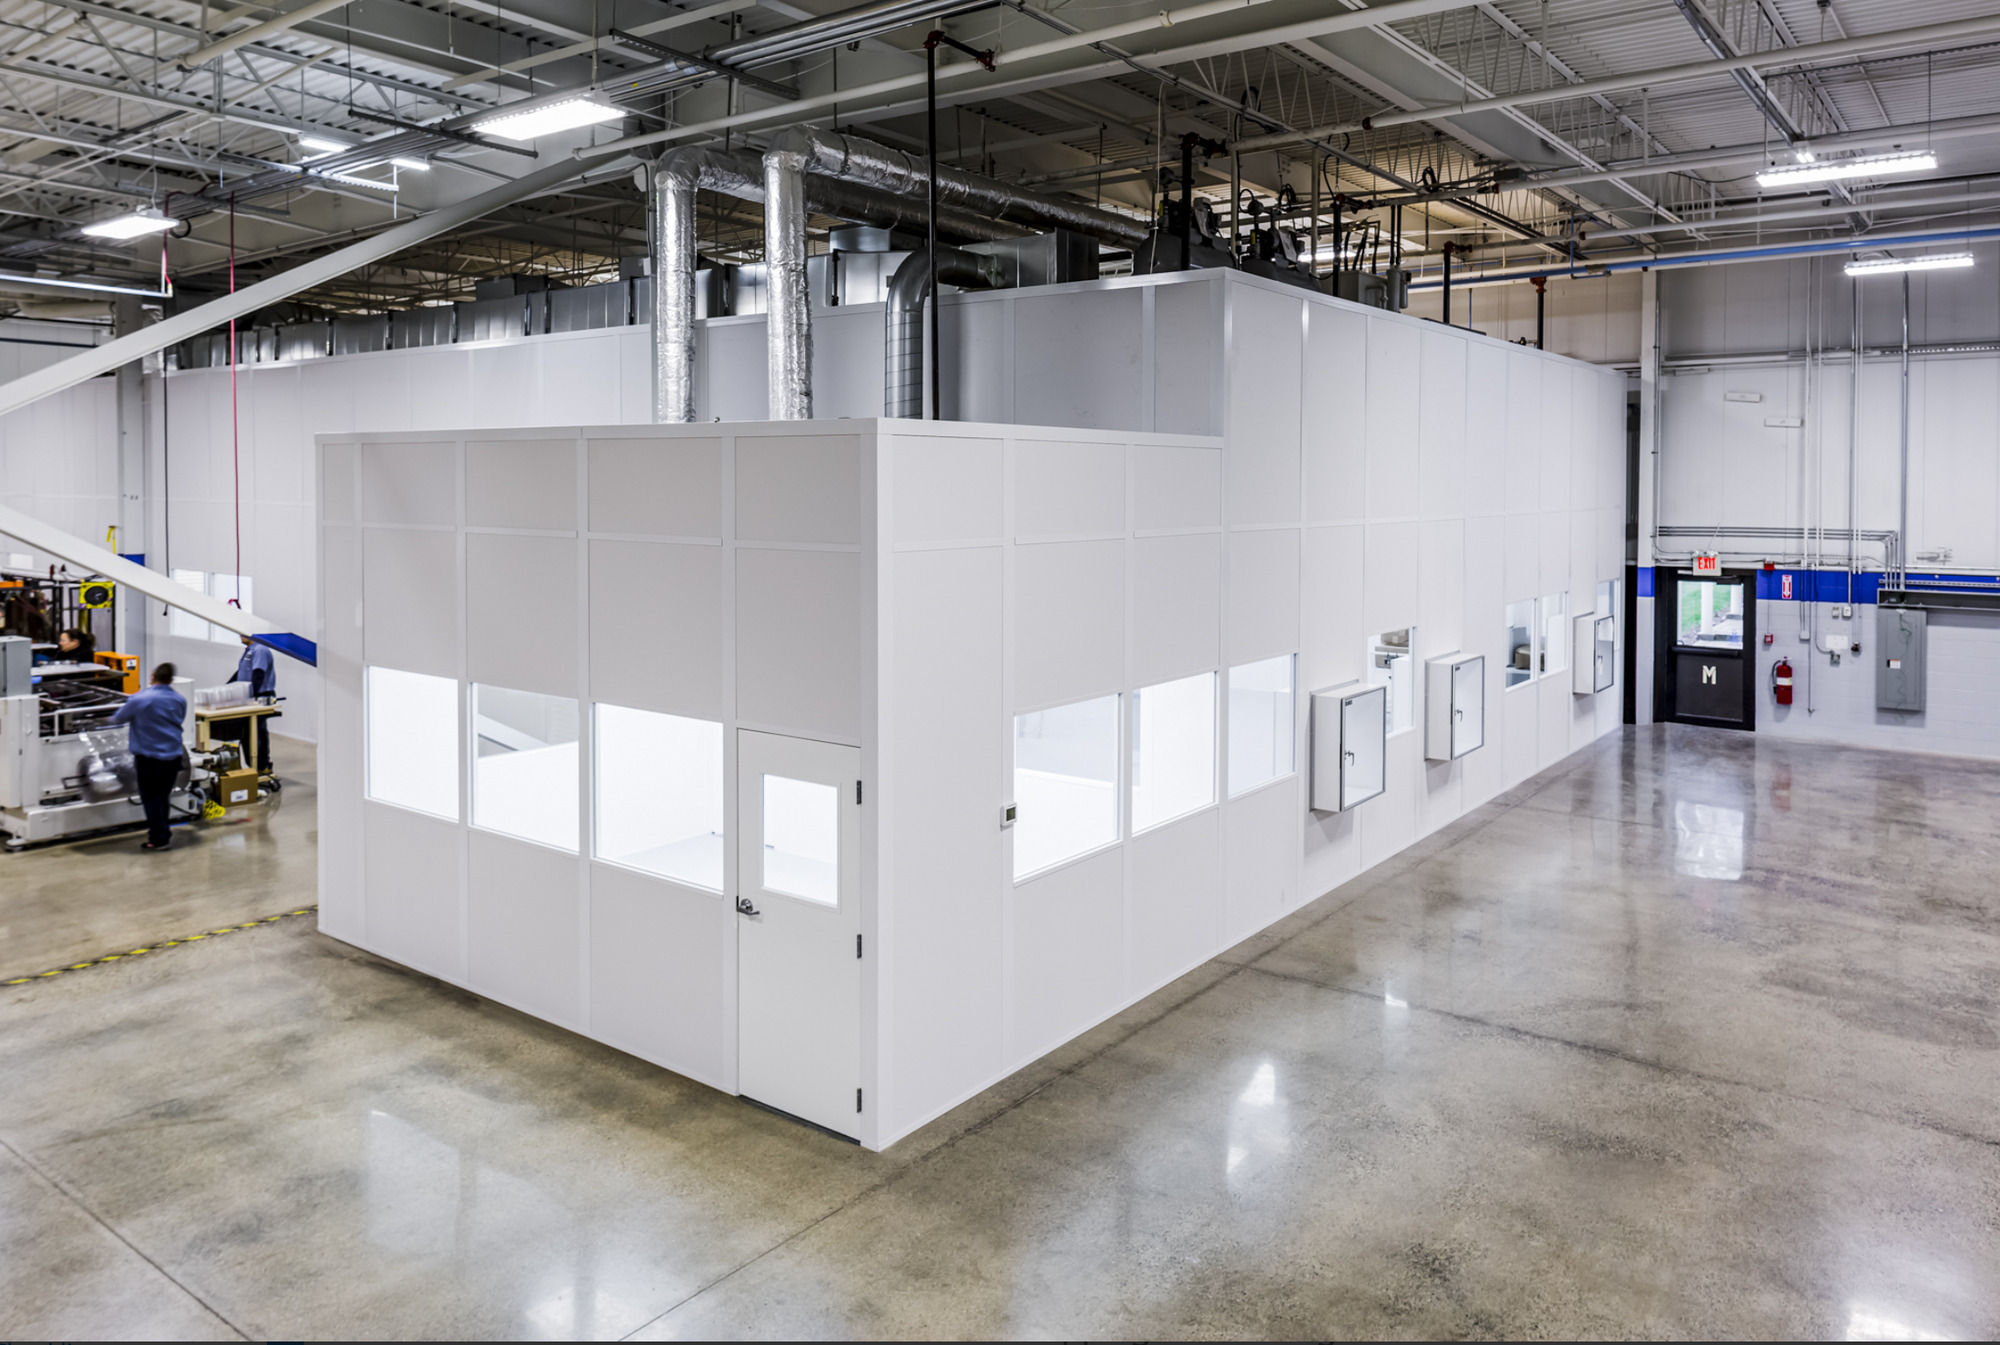 Modular Cleanrooms in Warehouse Settings